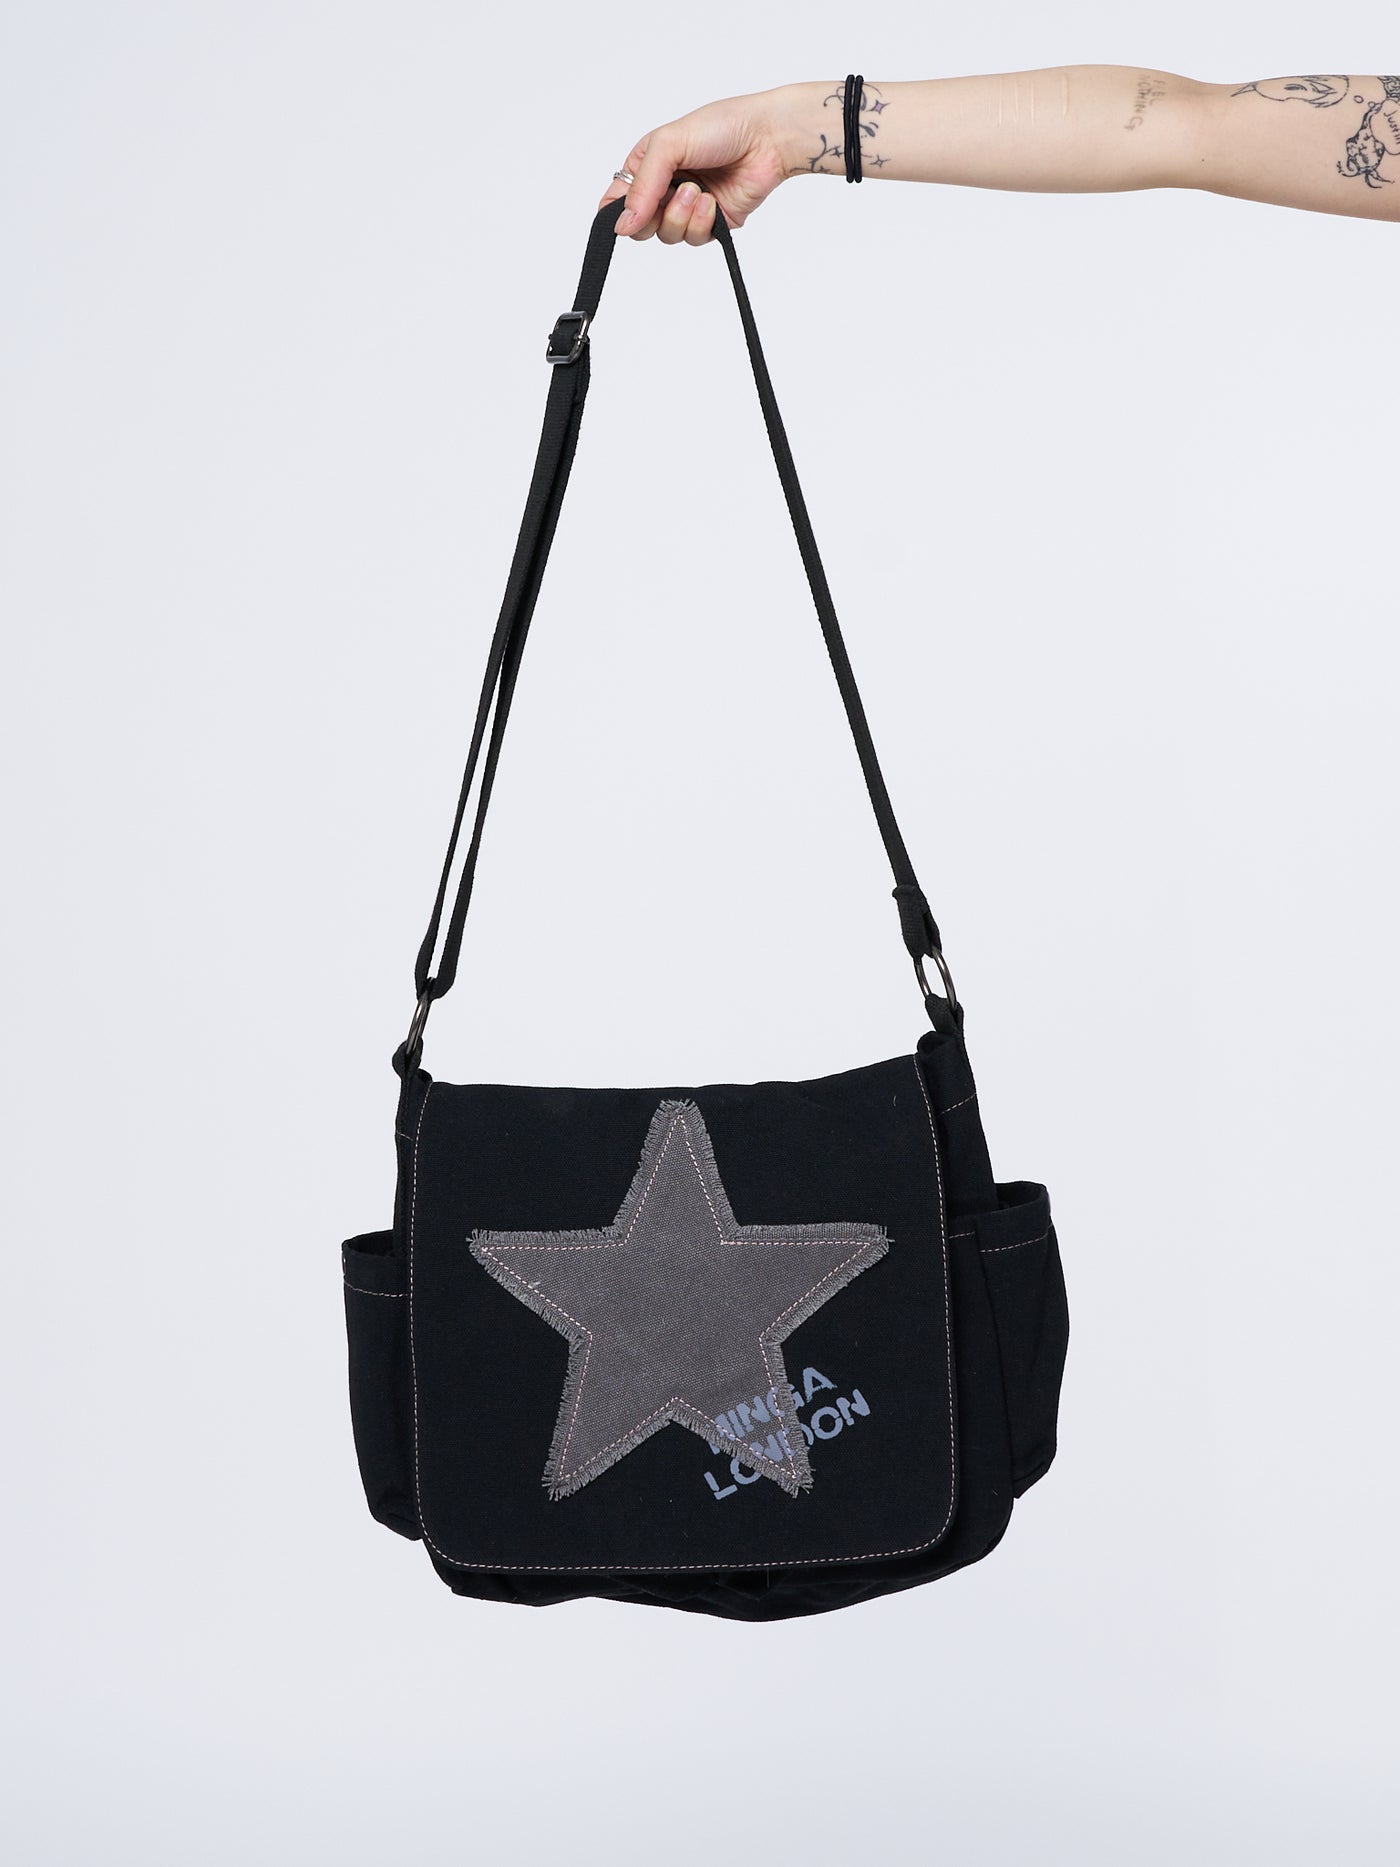 Black Canvas Messenger Bag with Grey Star Front Print | Minga London ...